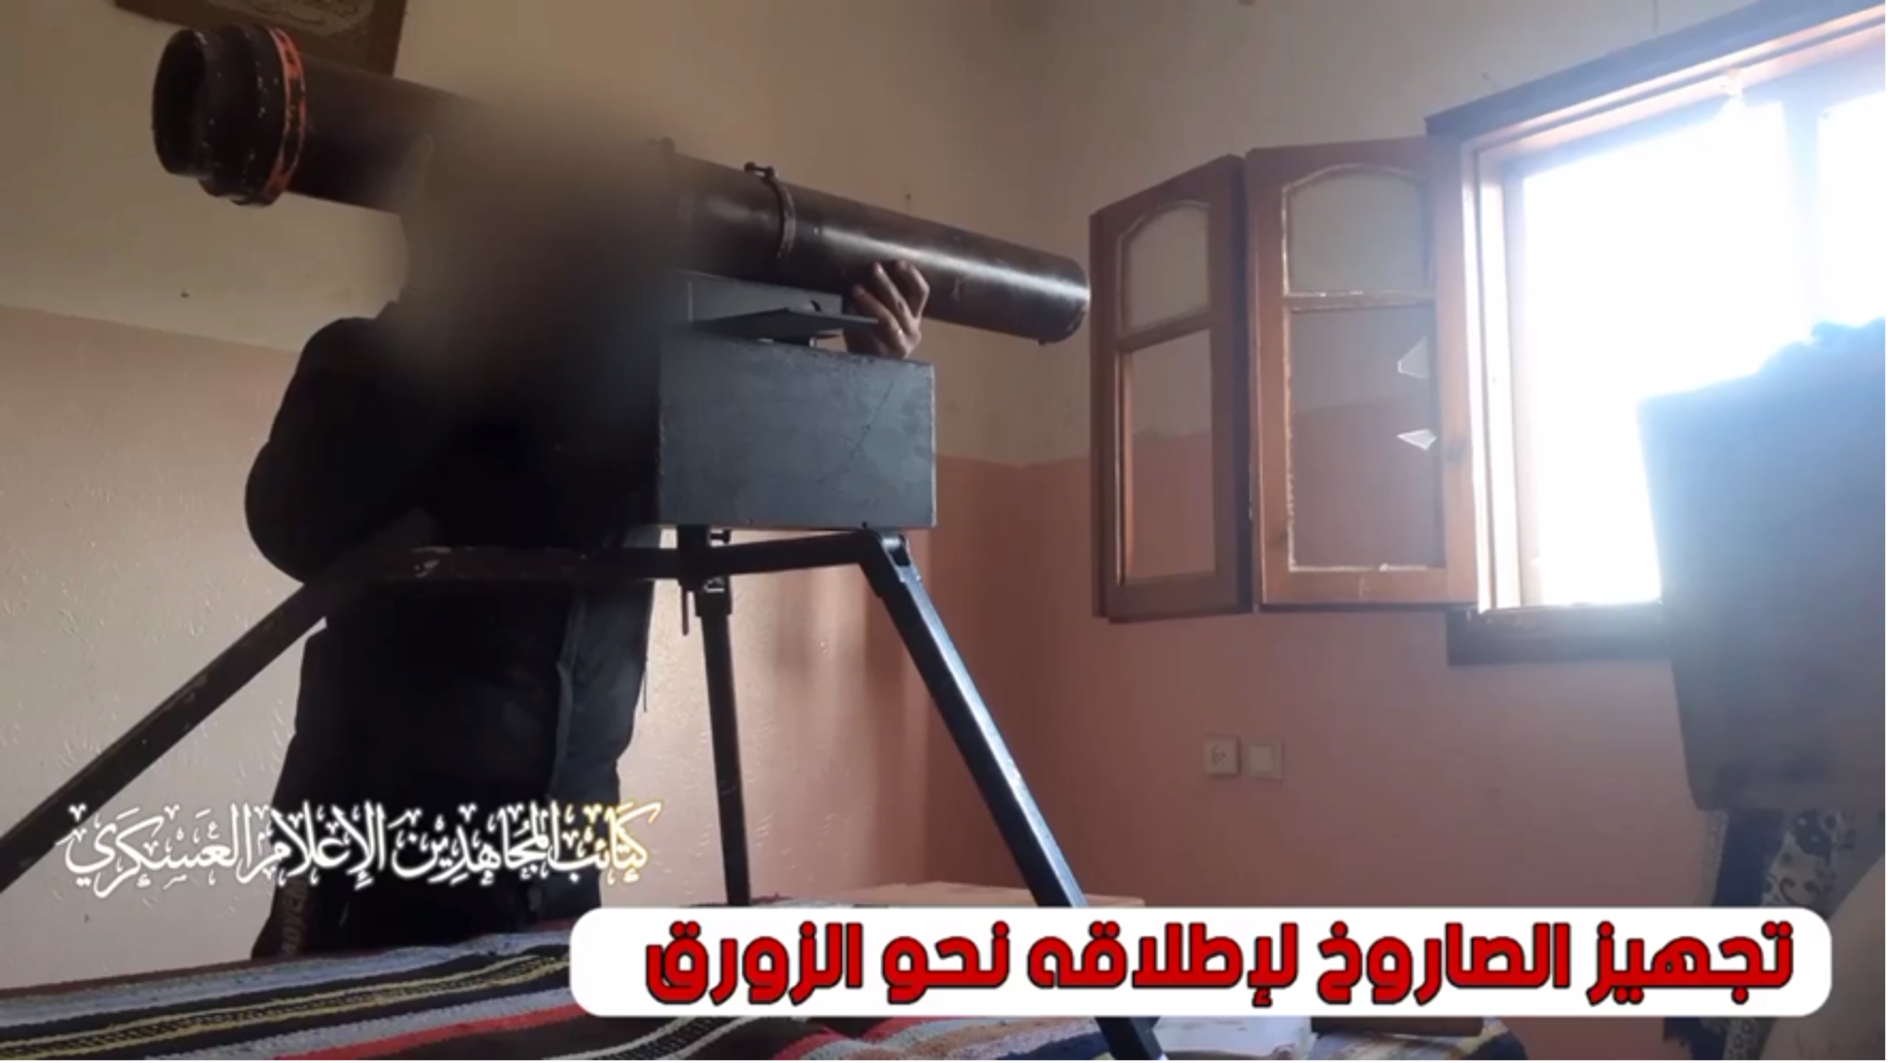 MB video still showing a fighter aiming a Sa’ir rocket at an IDF naval vessel. (Source: Telegram)